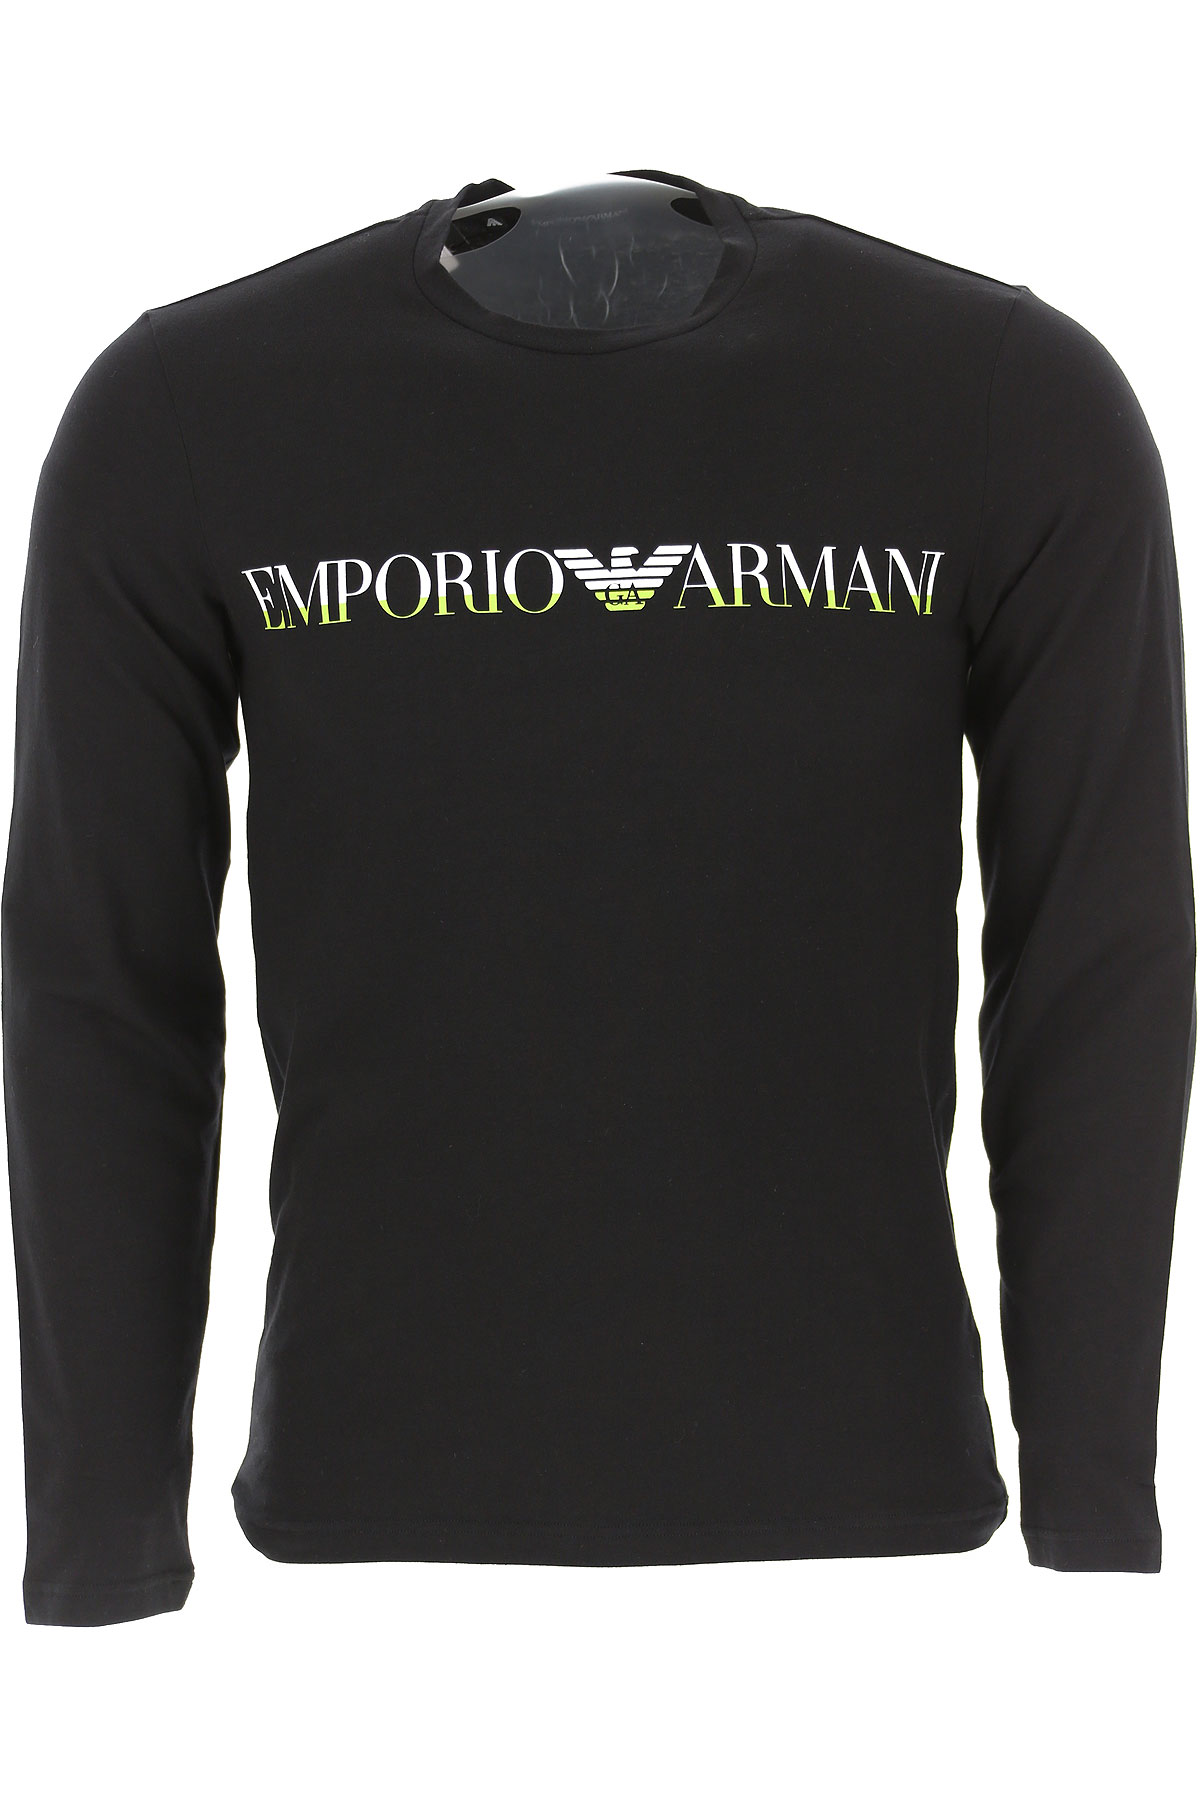 Mens Clothing Emporio Armani, Style code: 111653-9a516-00020